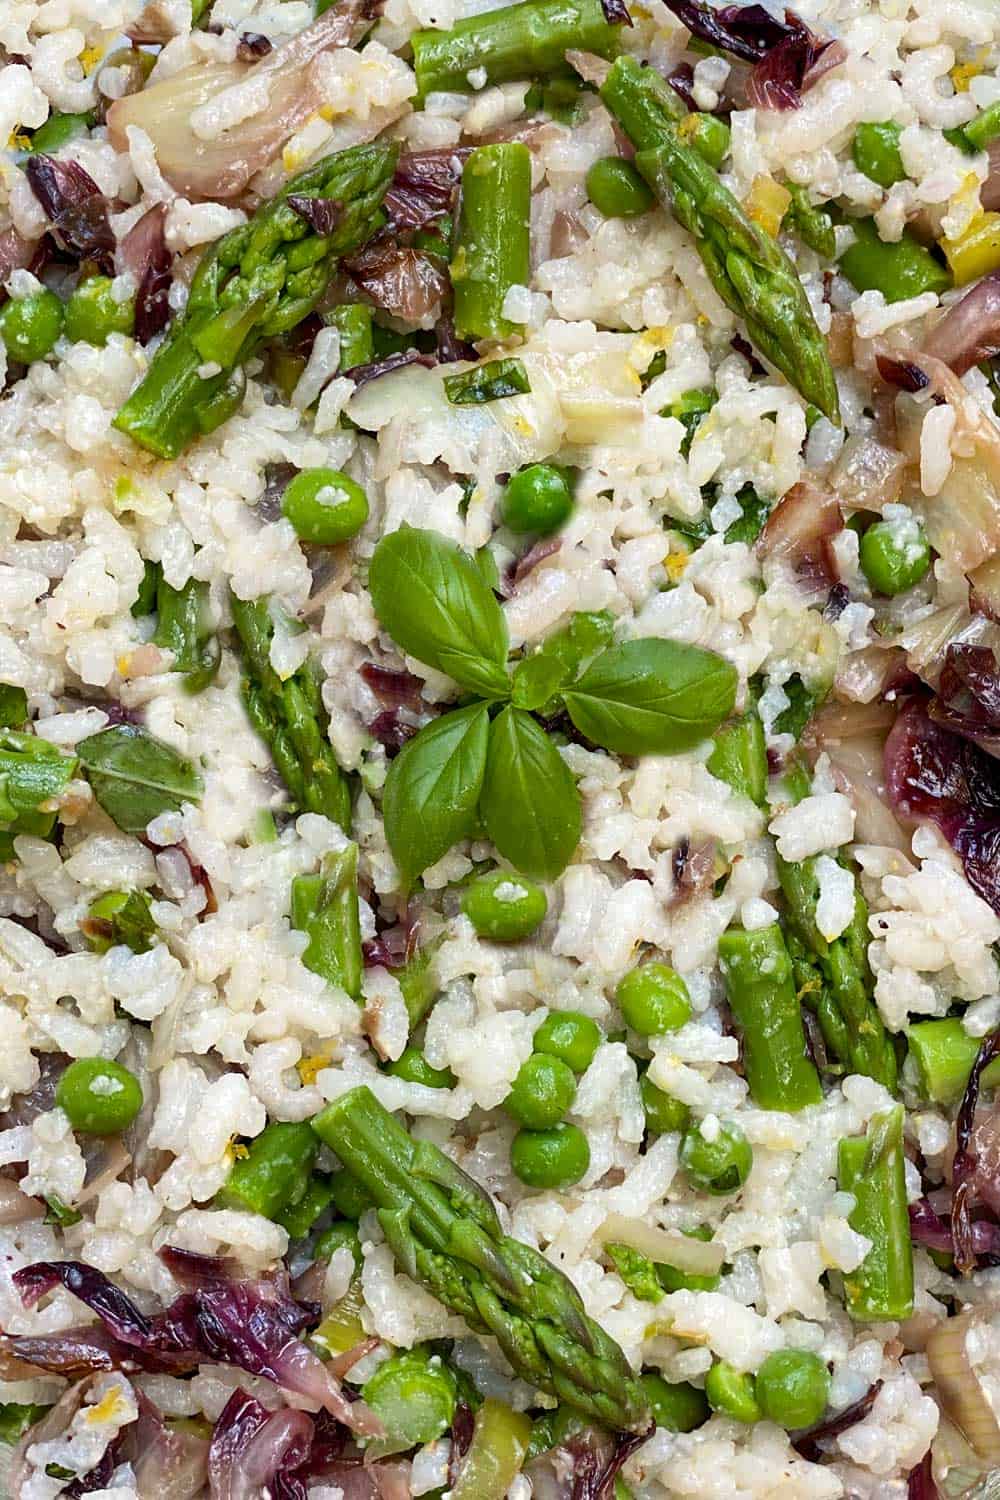 mediterranean rice salad close up, showing grains of arborio rice, asparagus tips, green peas, bits of sautéed radicchio and leeks.